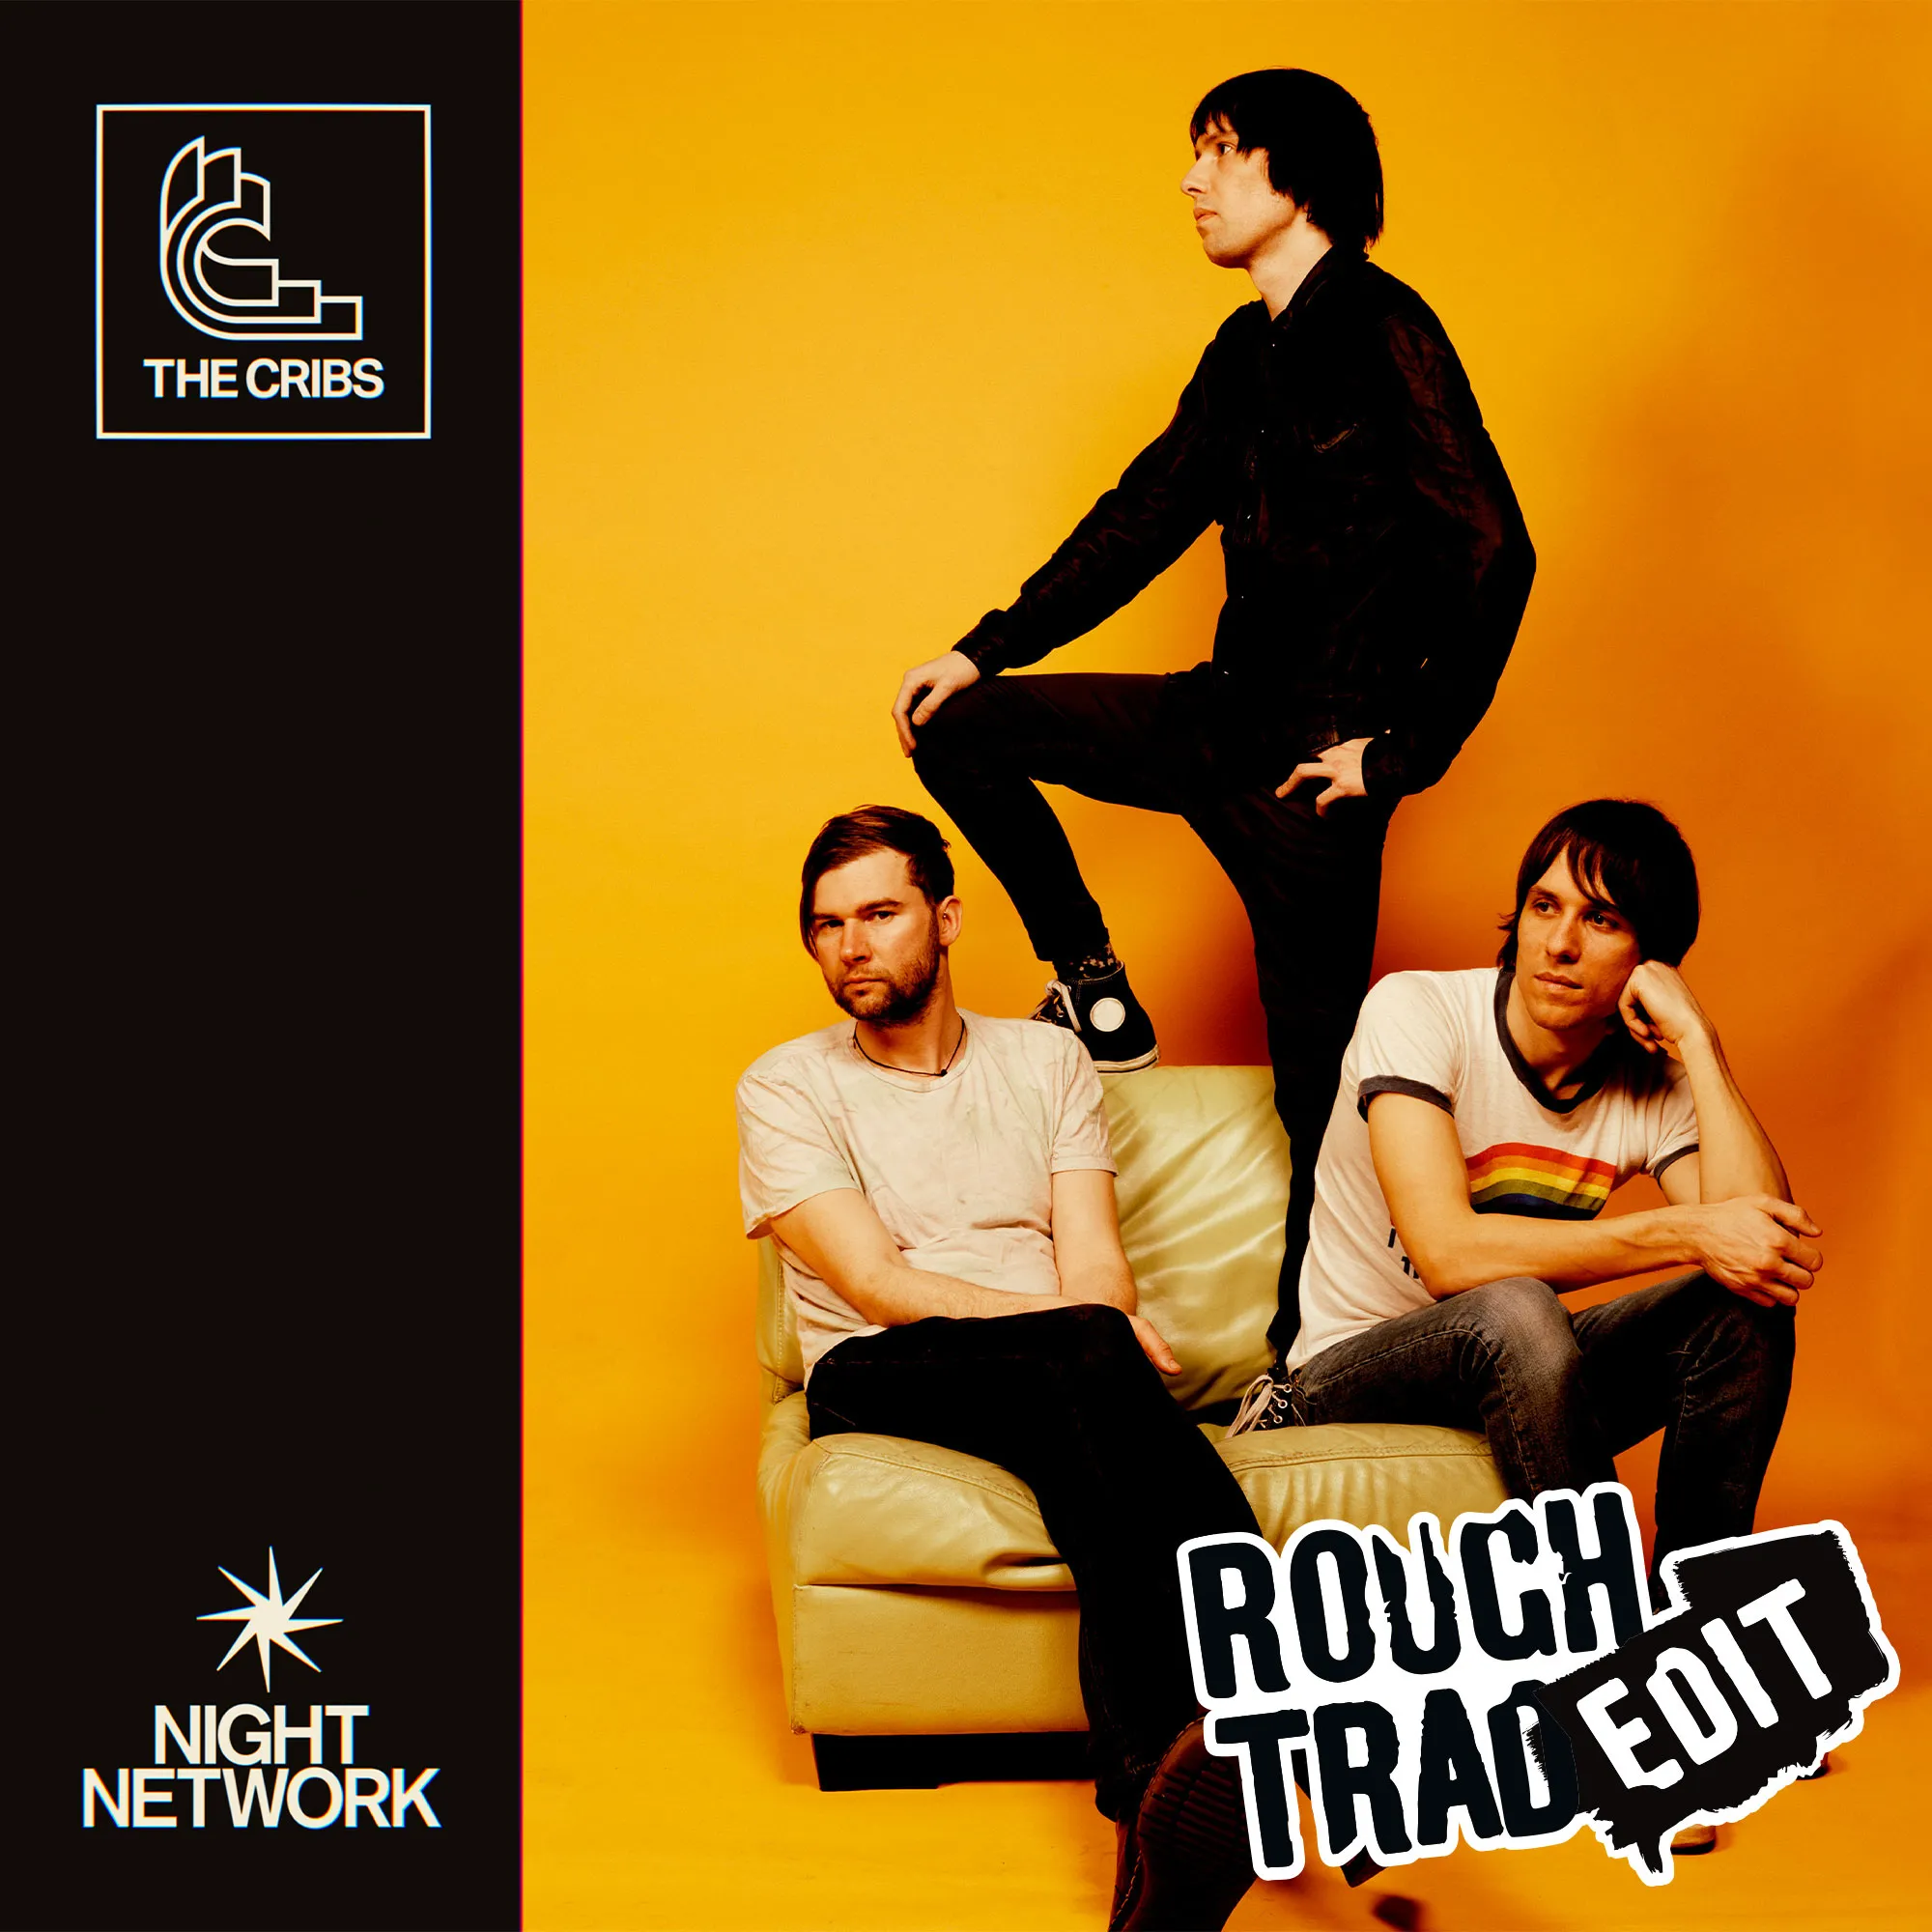 Buy Night Network via Rough Trade